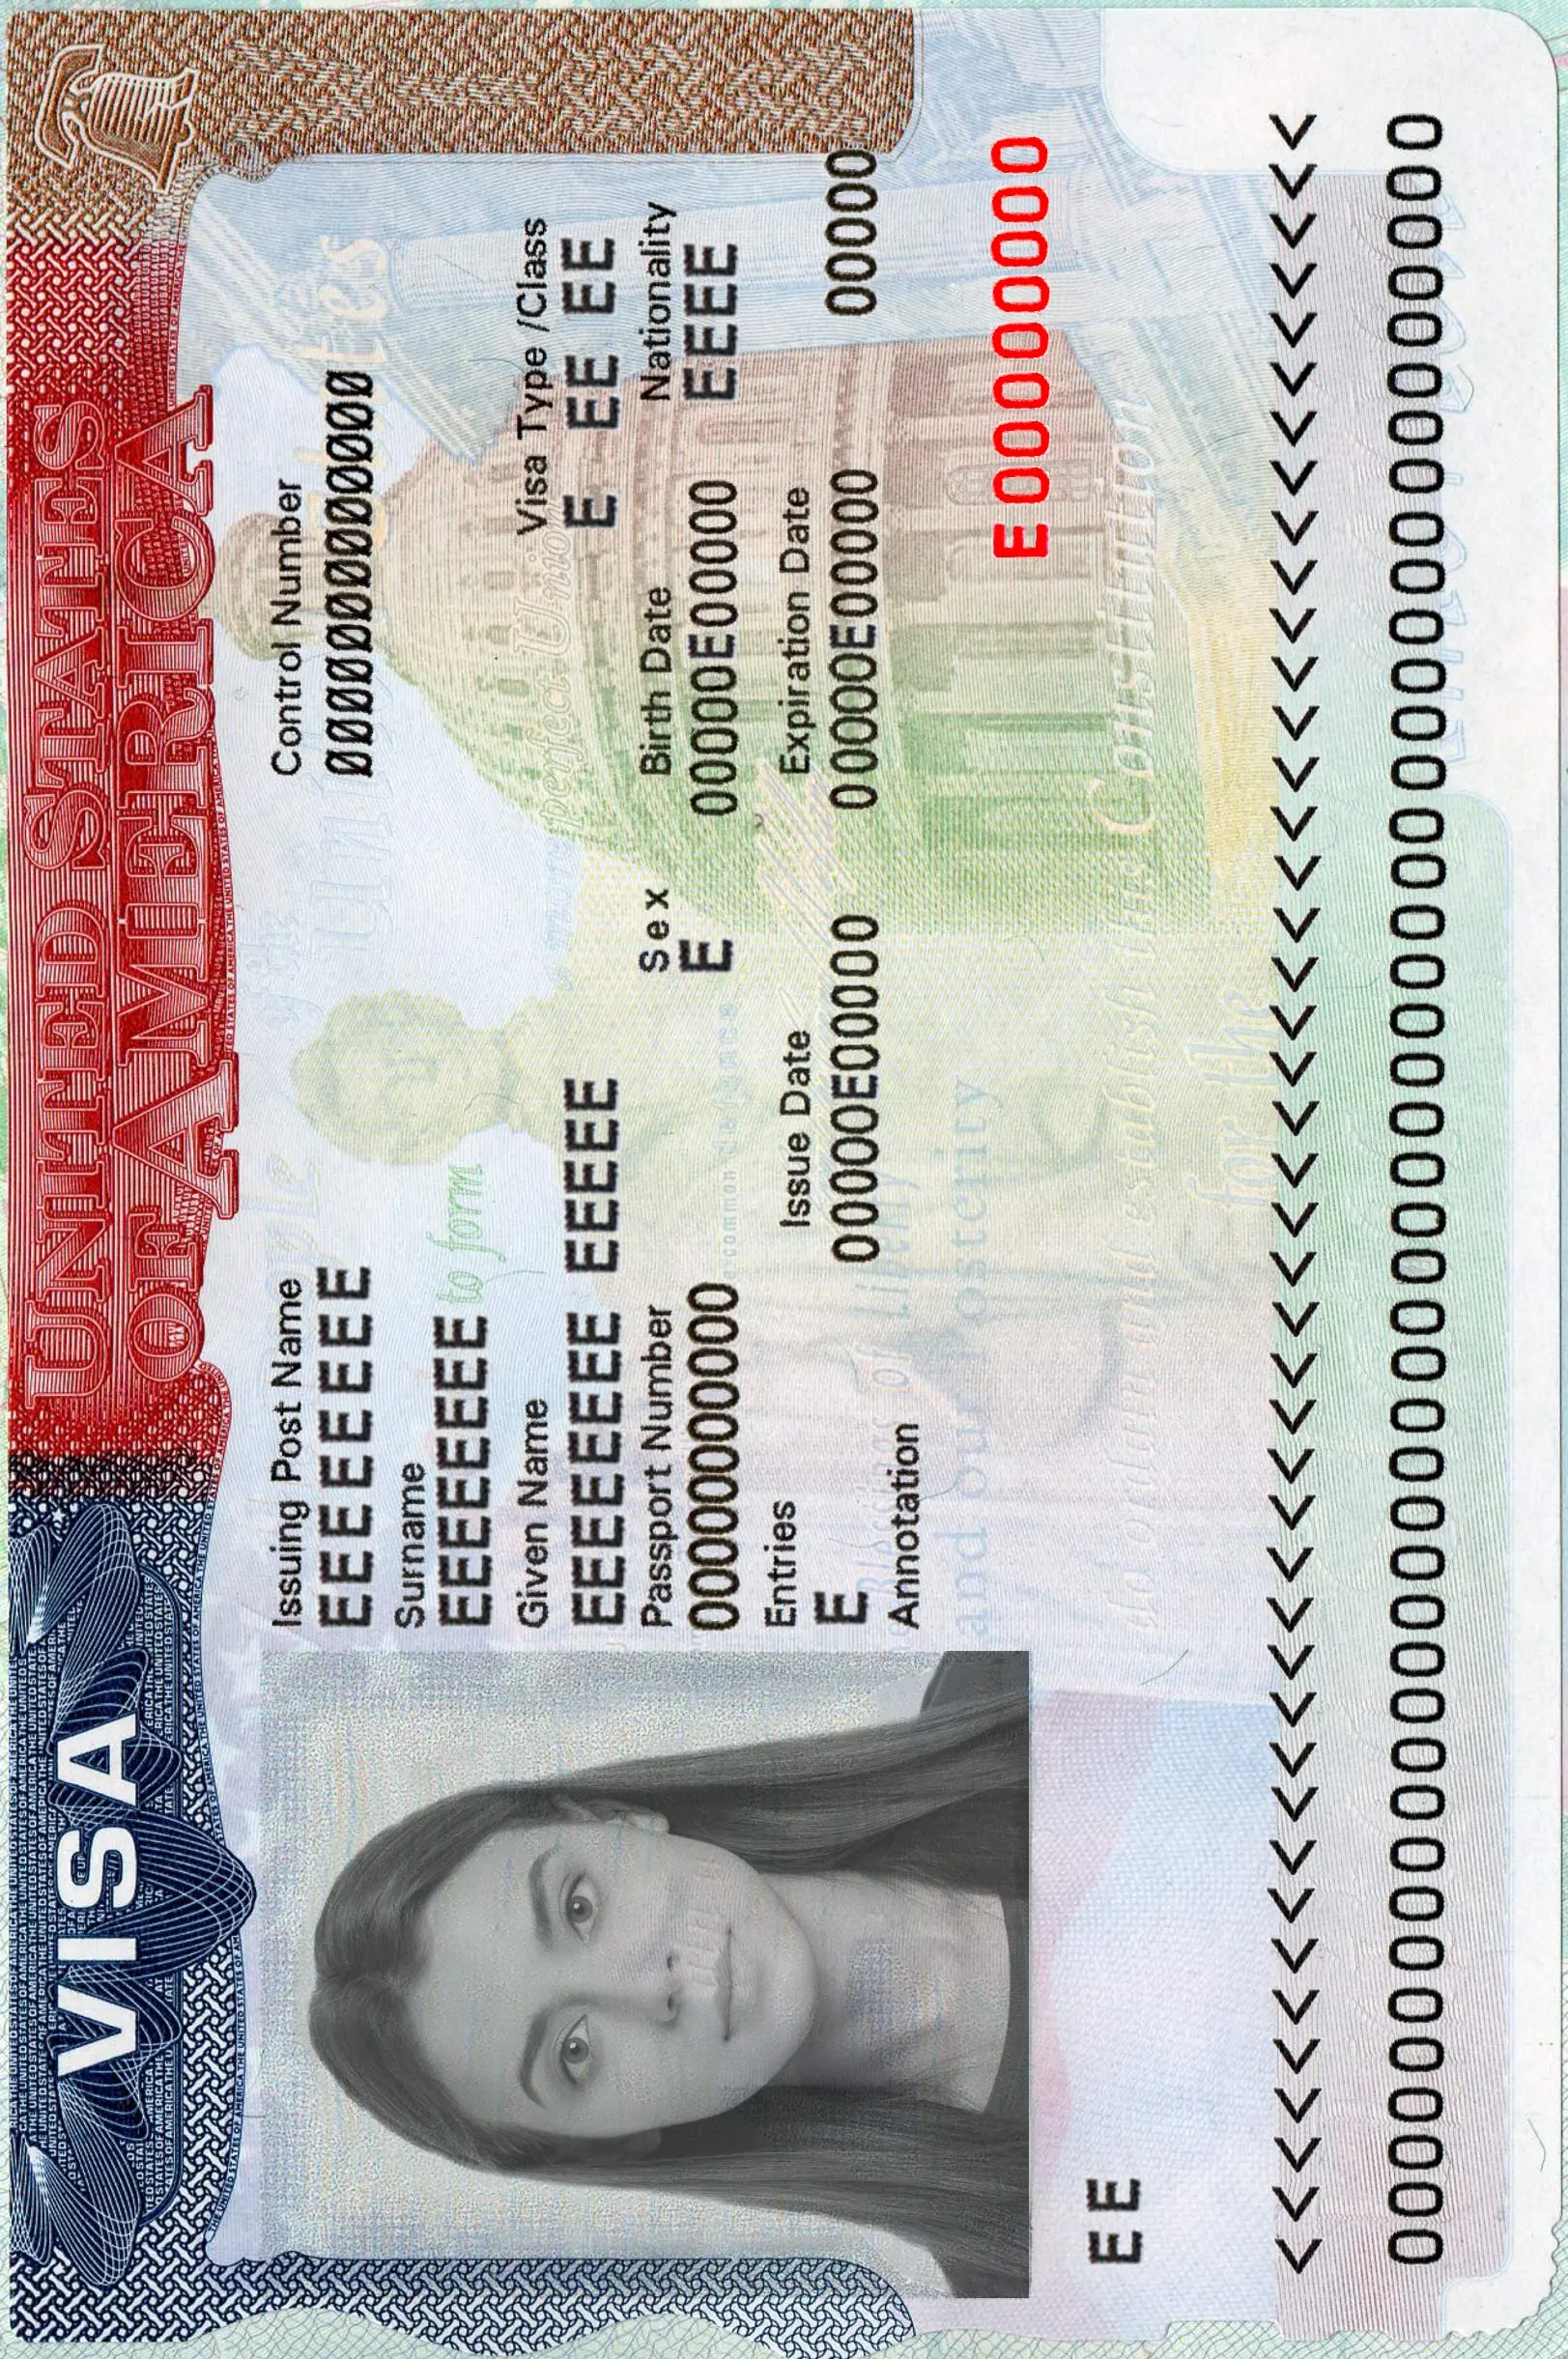 Foto para la visa americana